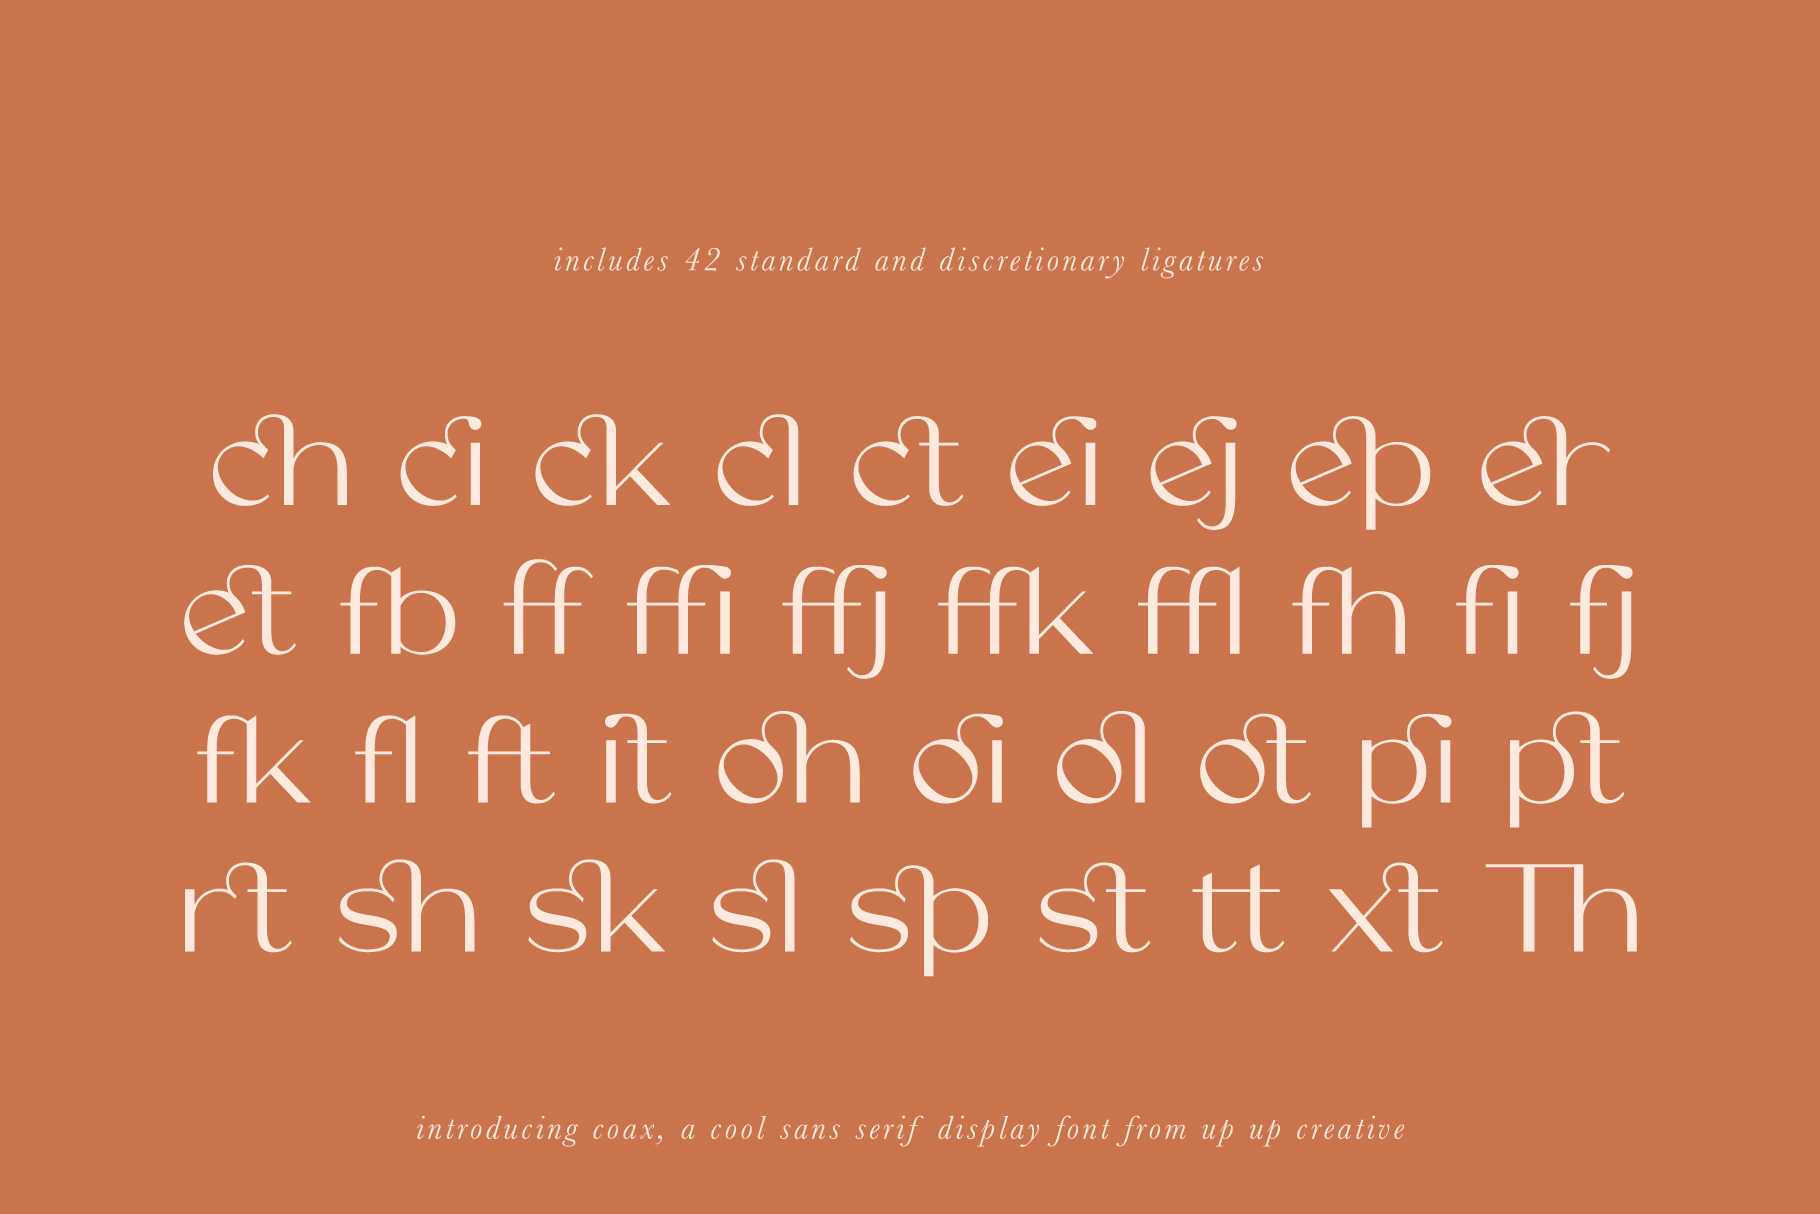 Coax Sans Serif Display Font - Up Up Creative